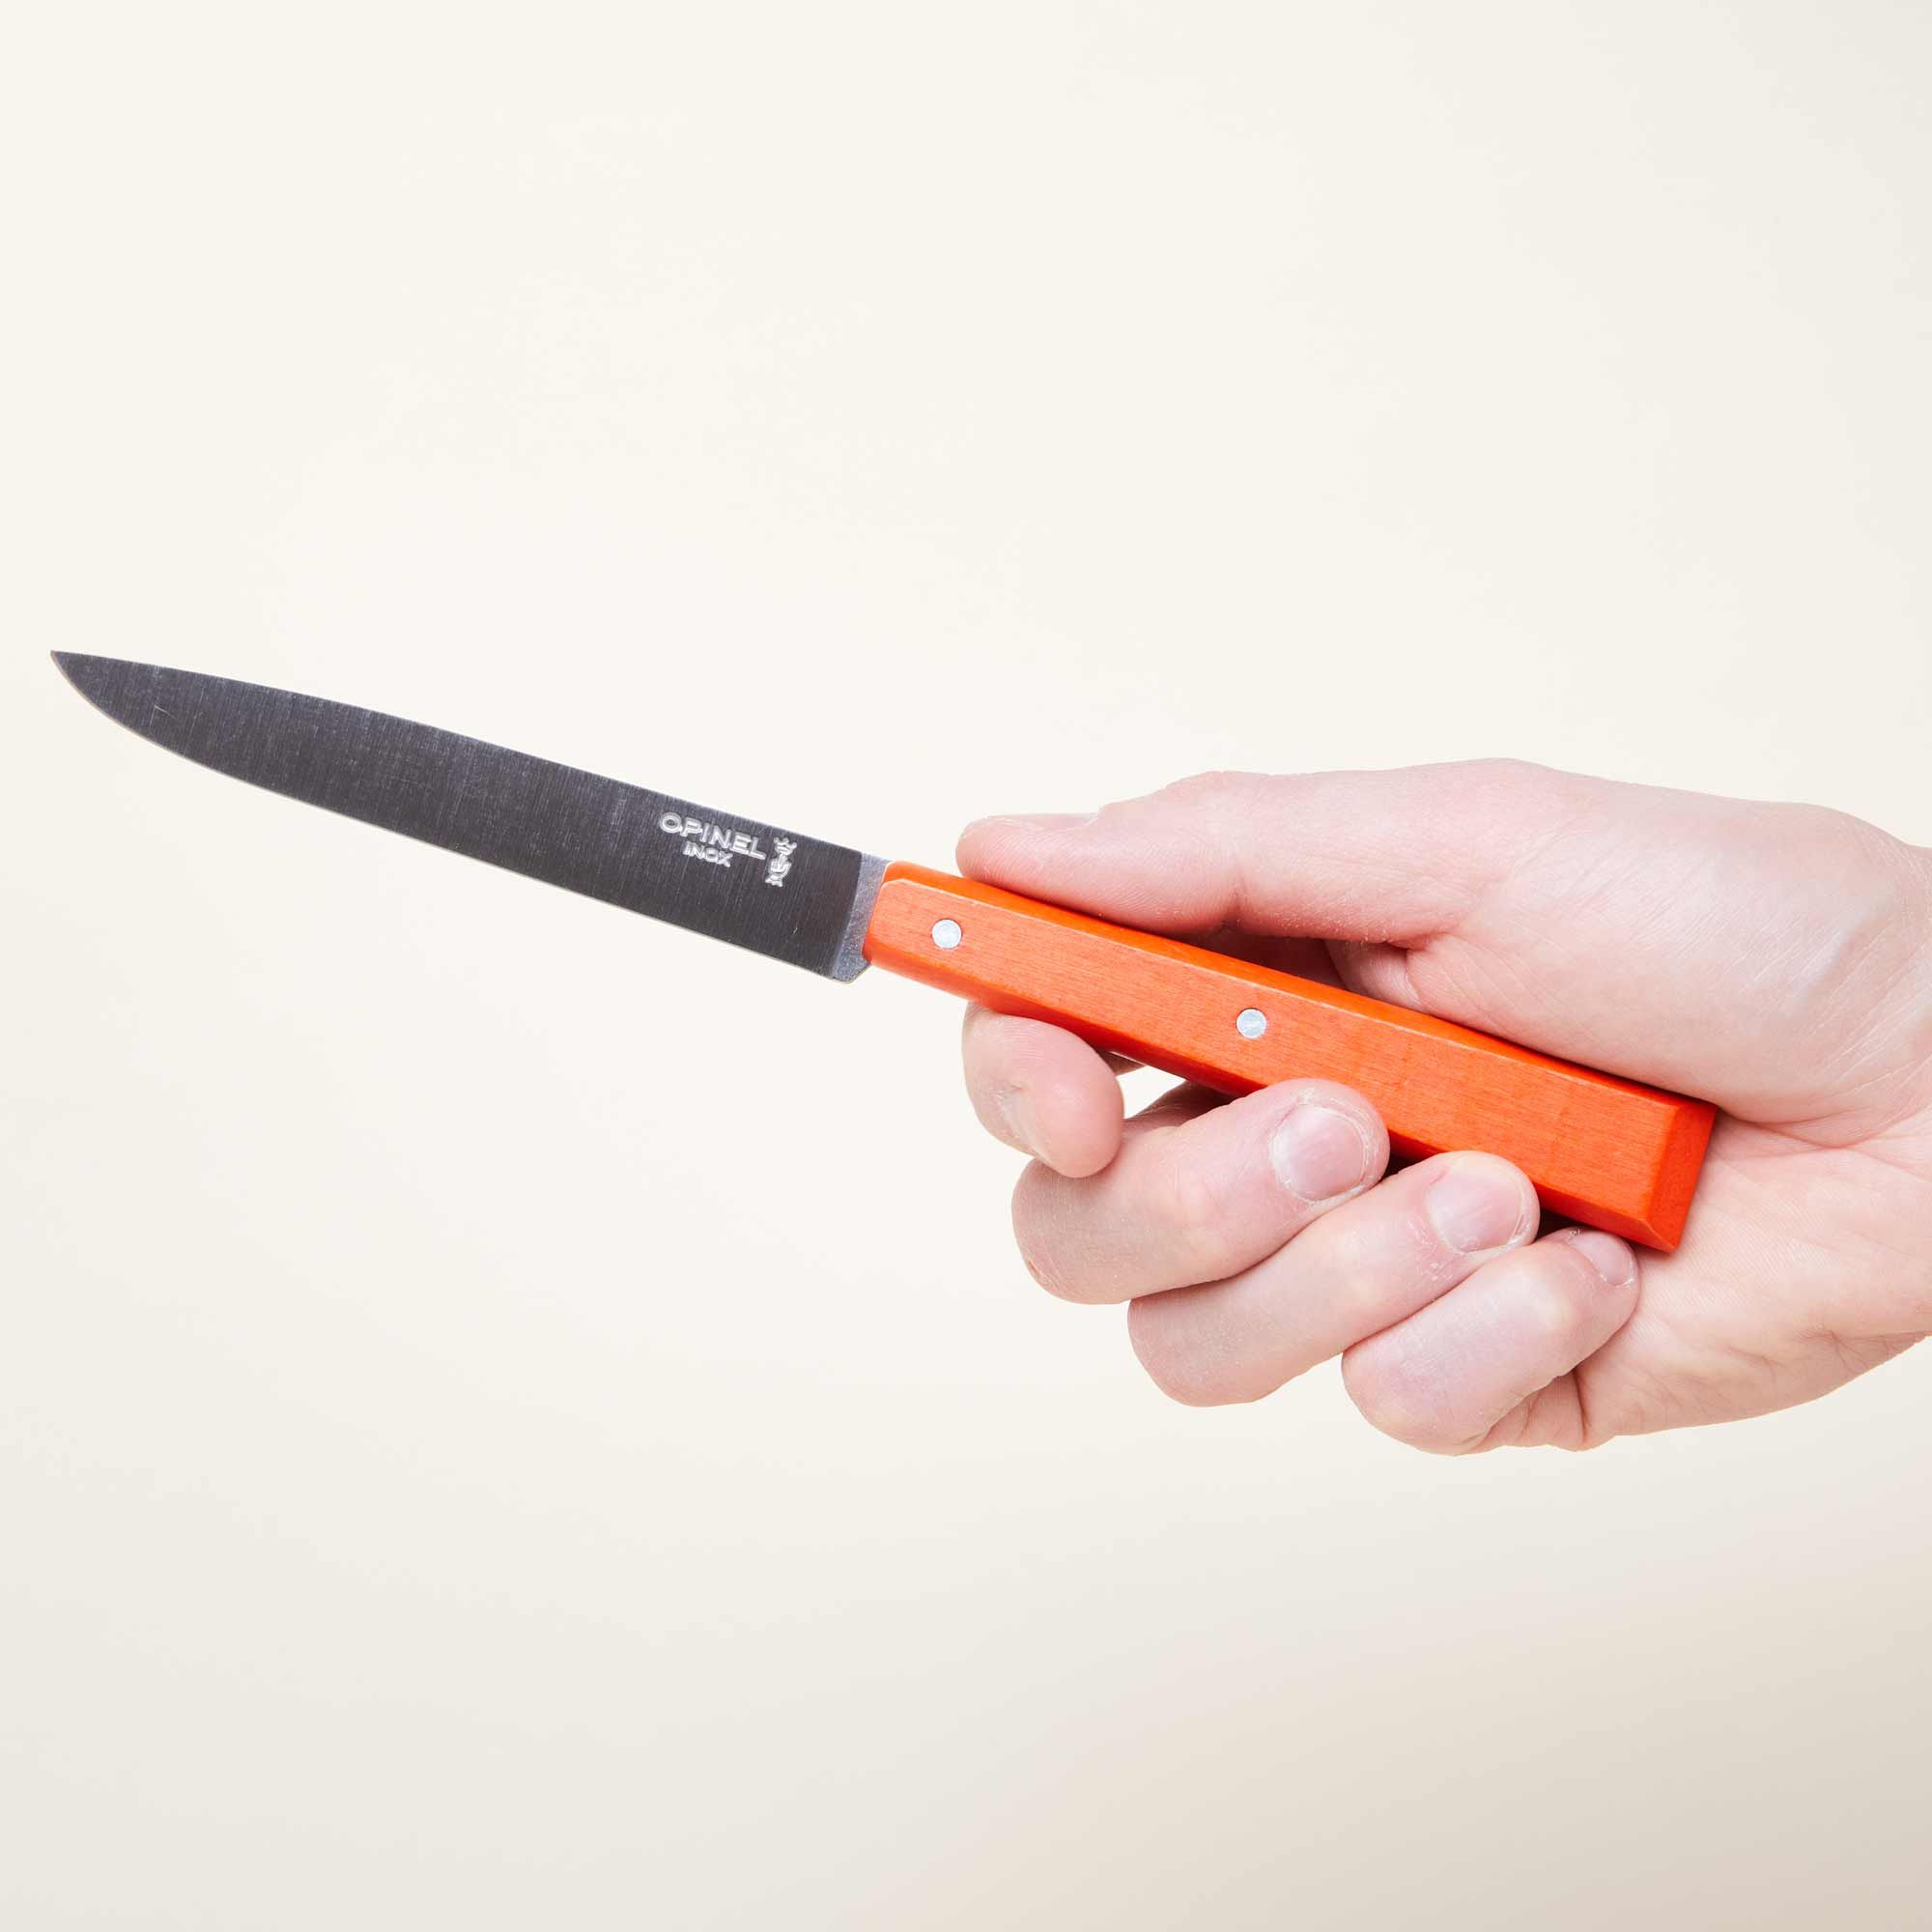 A hand holds a steak knife with a bold orange handle